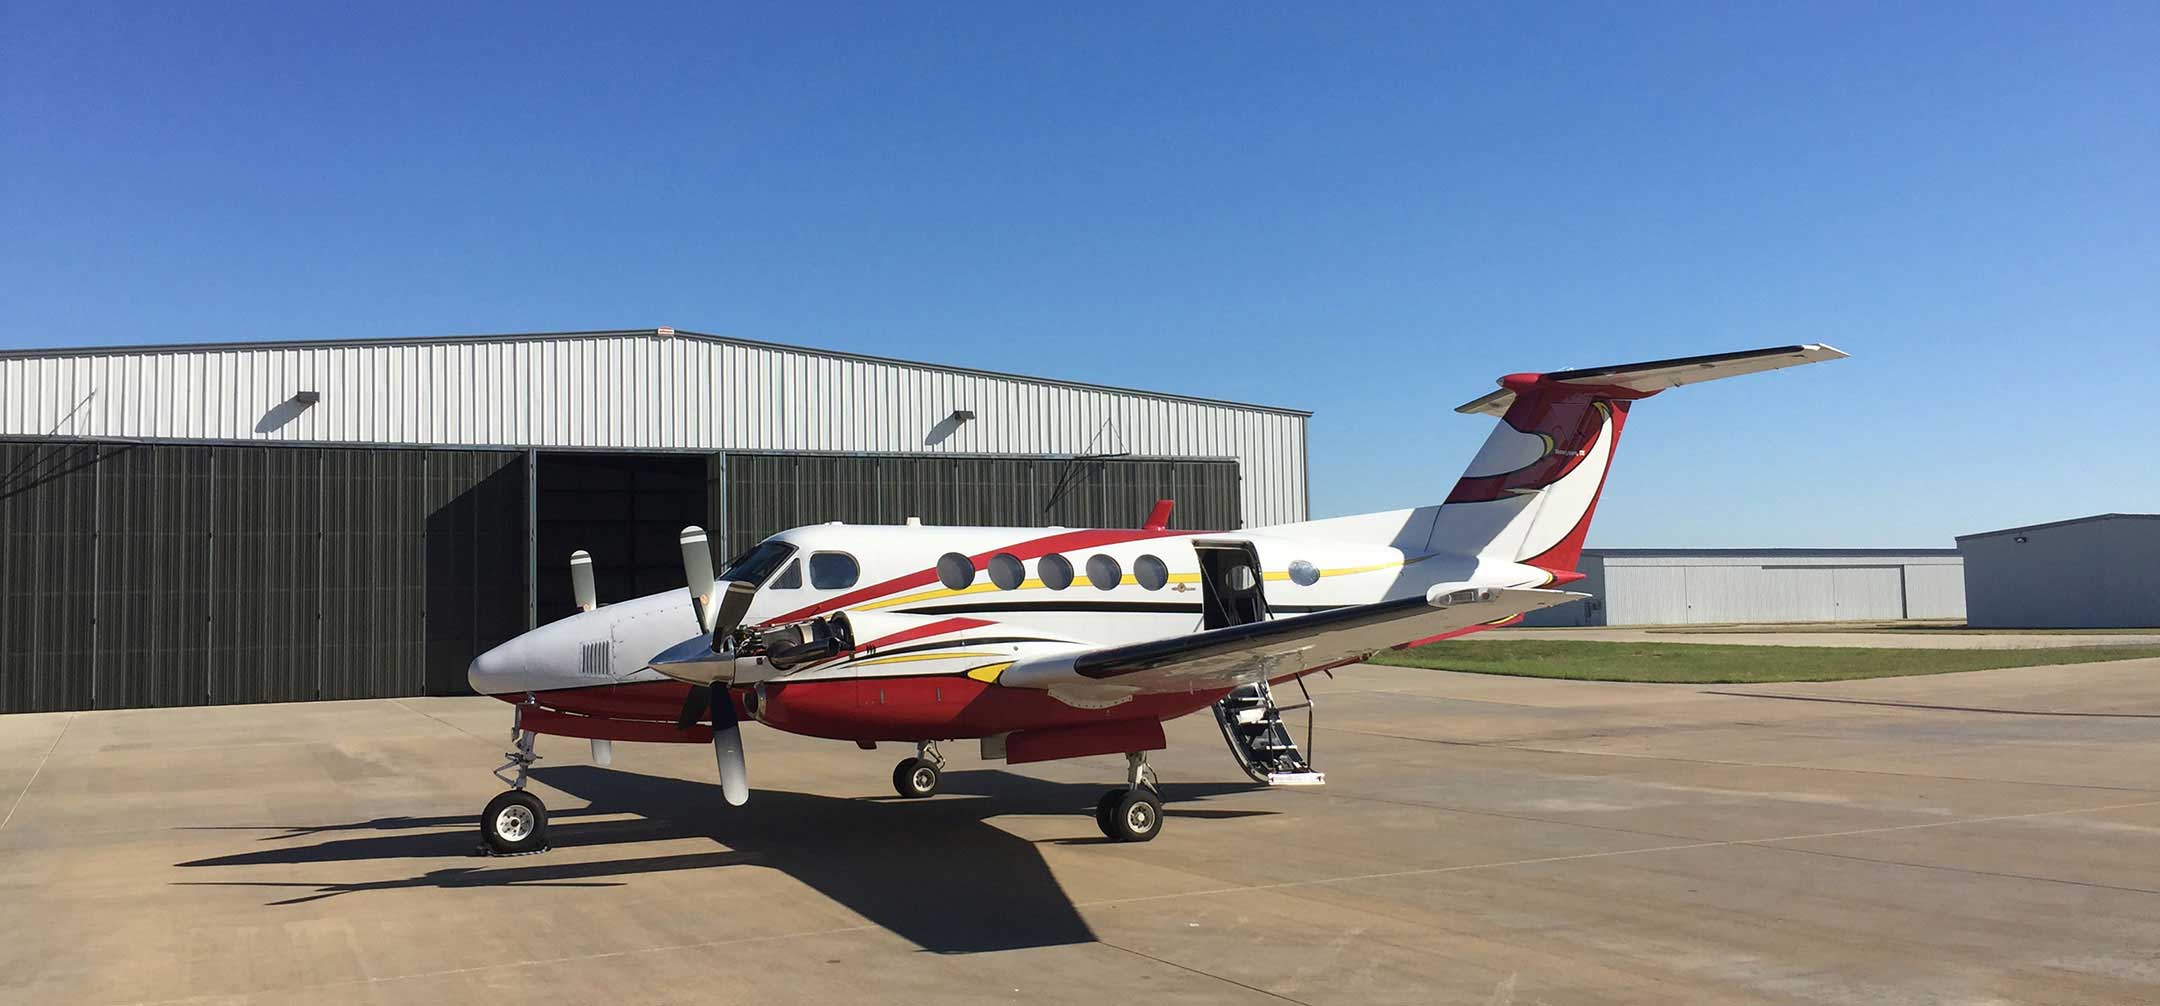 Texas Aircraft Propeller & Accessories | Pearland, TX